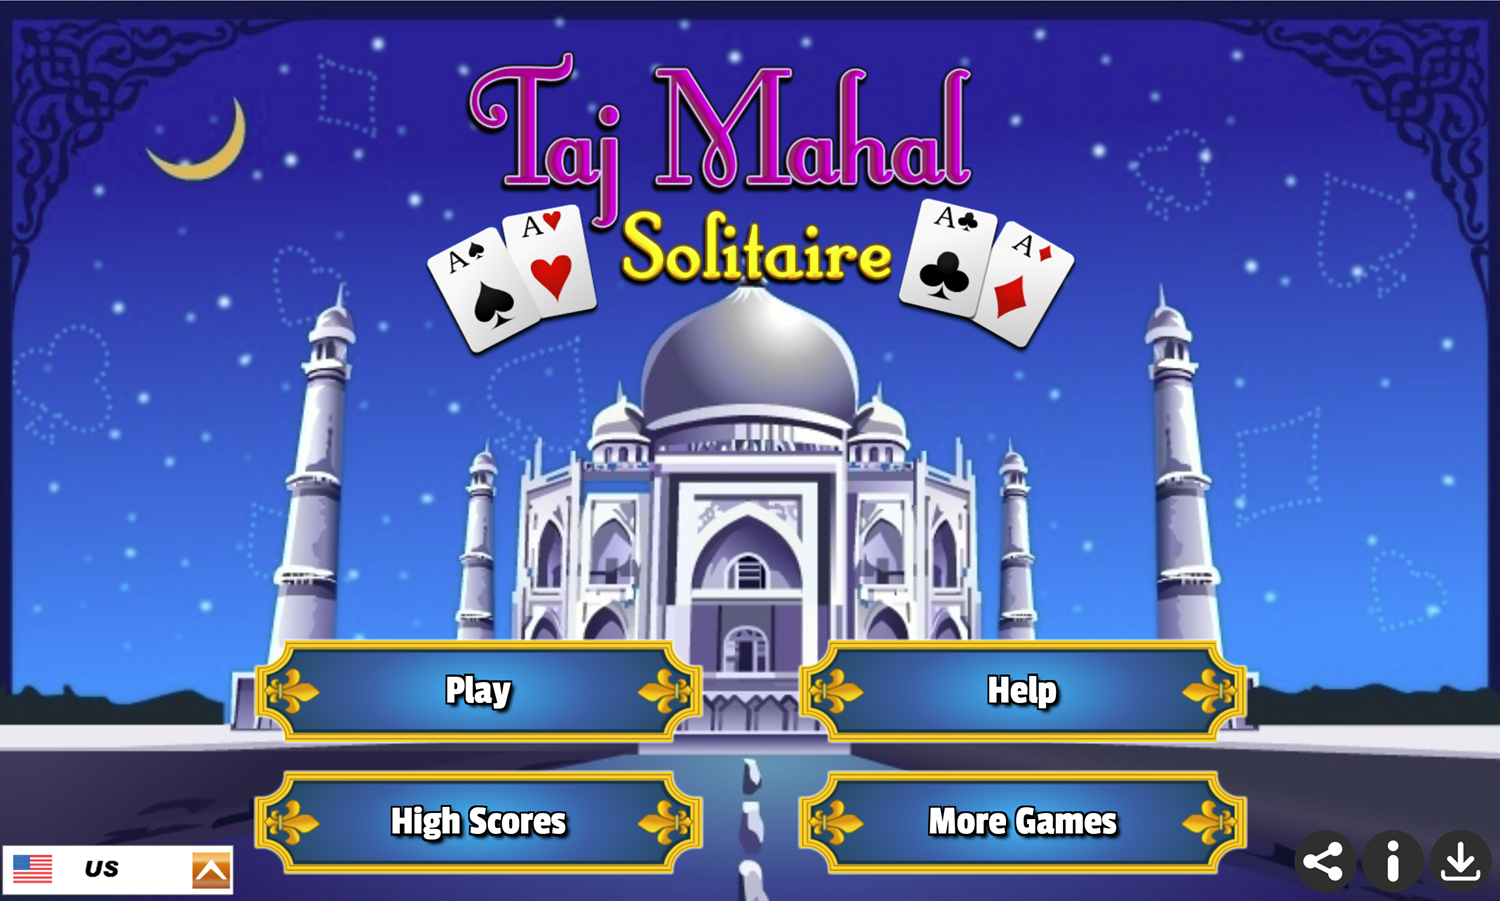 Taj Mahal Solitaire Game Welcome Screen Screenshot.